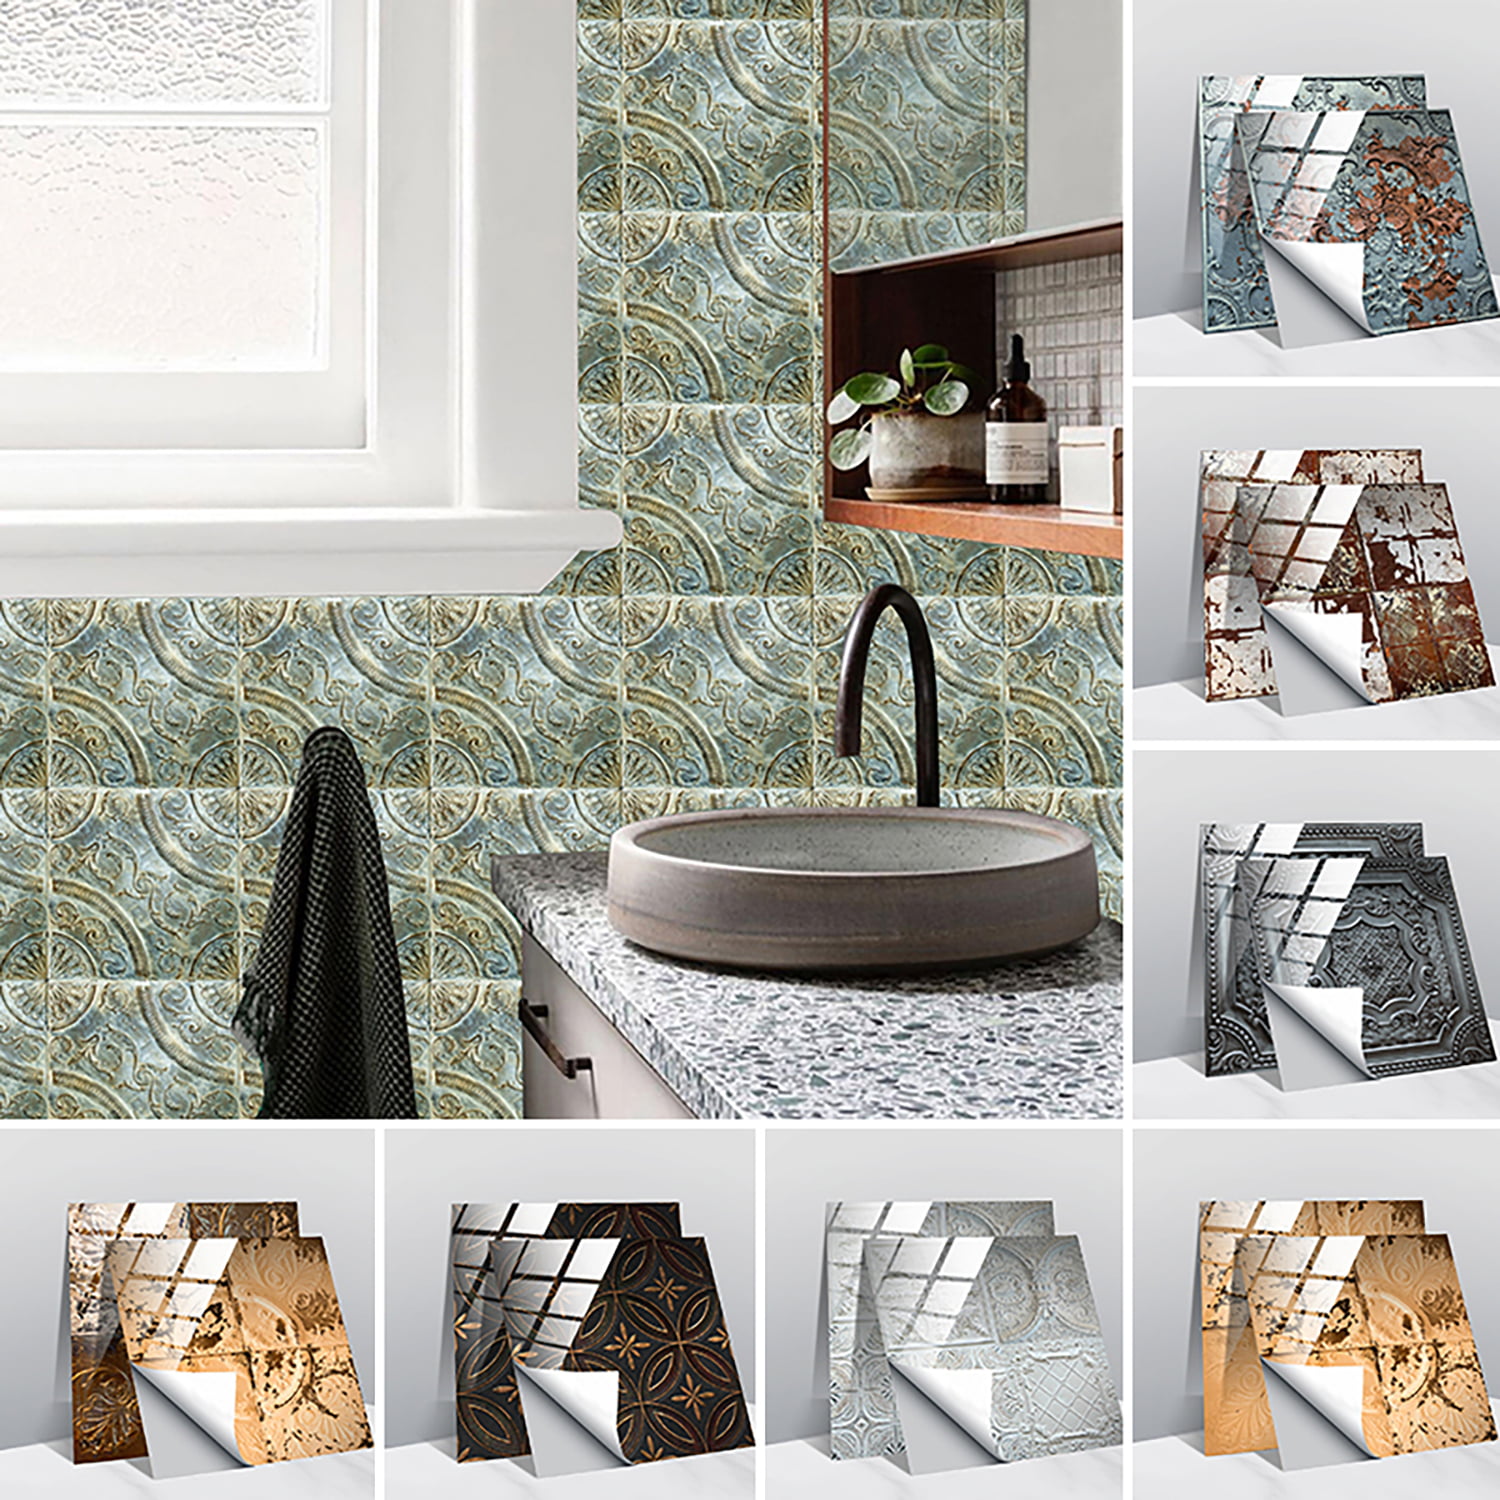 Tile Sticker Vinyl Decal for Kitchen Bathroom Backsplash Floor Decals,Self Adhesive Tile Decal,Marble Wall Stickers,Waterproof Peel&Stick